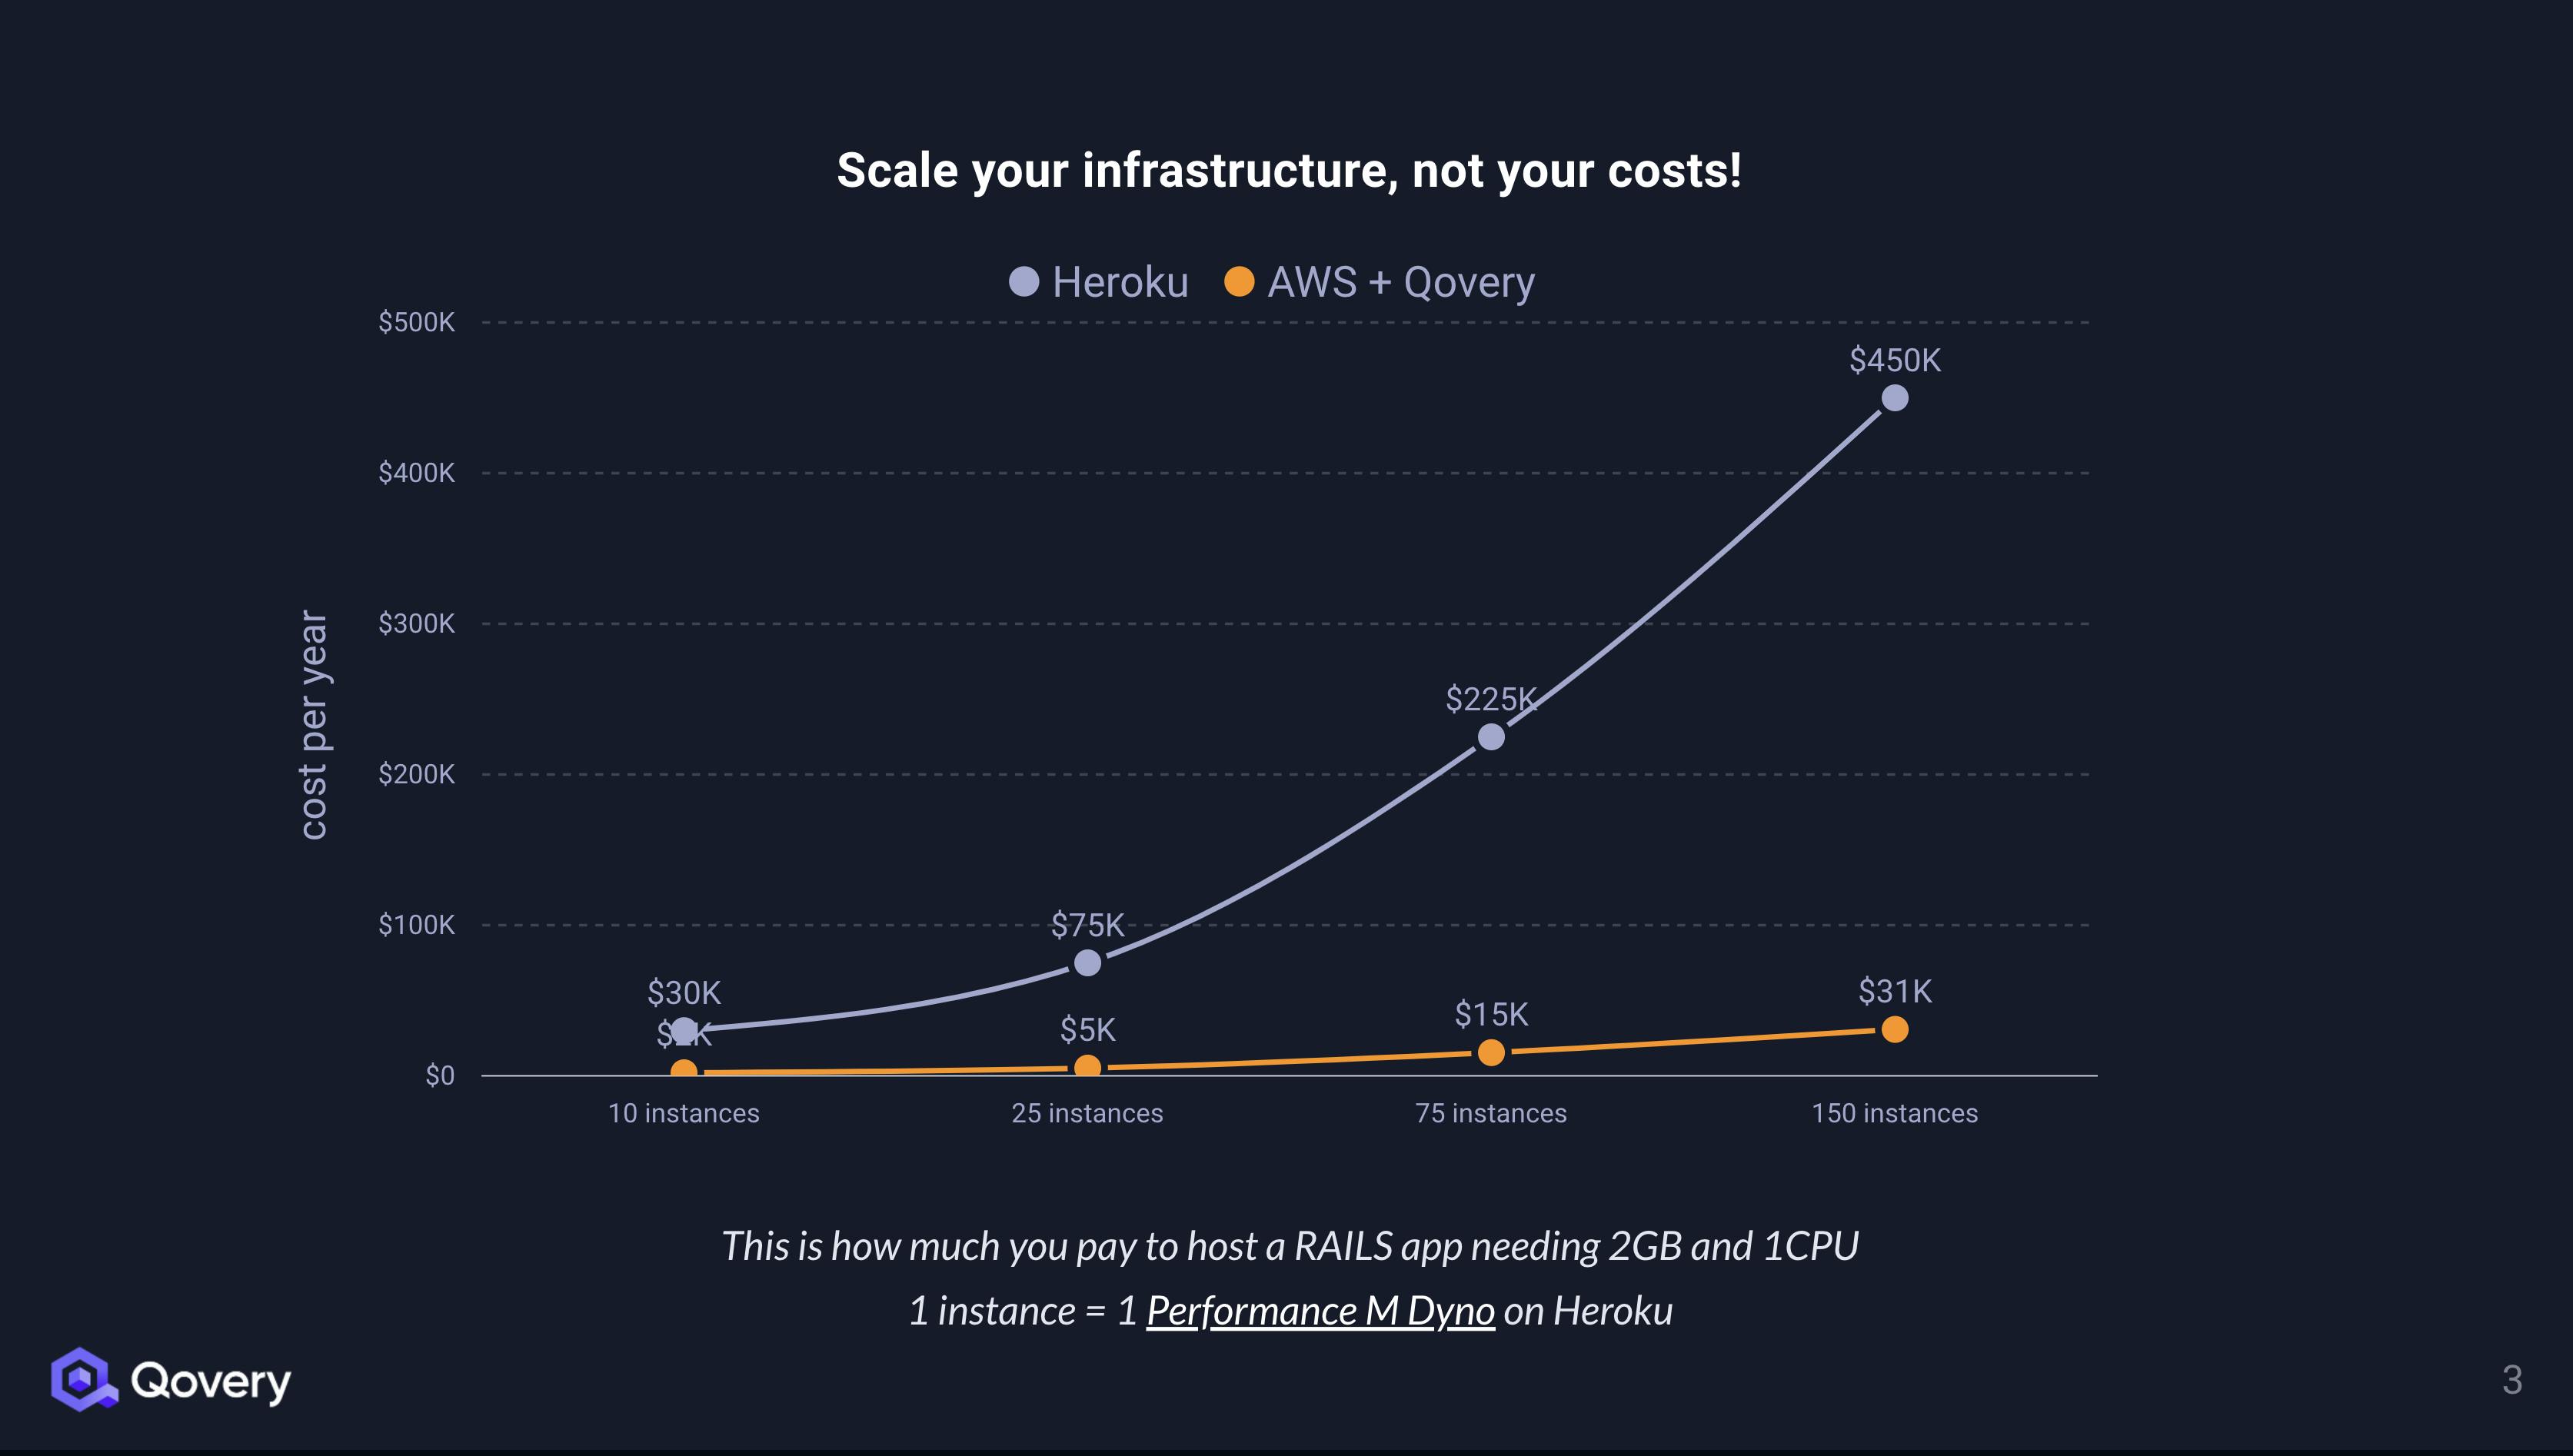 Heroku Vs. AWS + Qovery costs when scaling infrastructure 